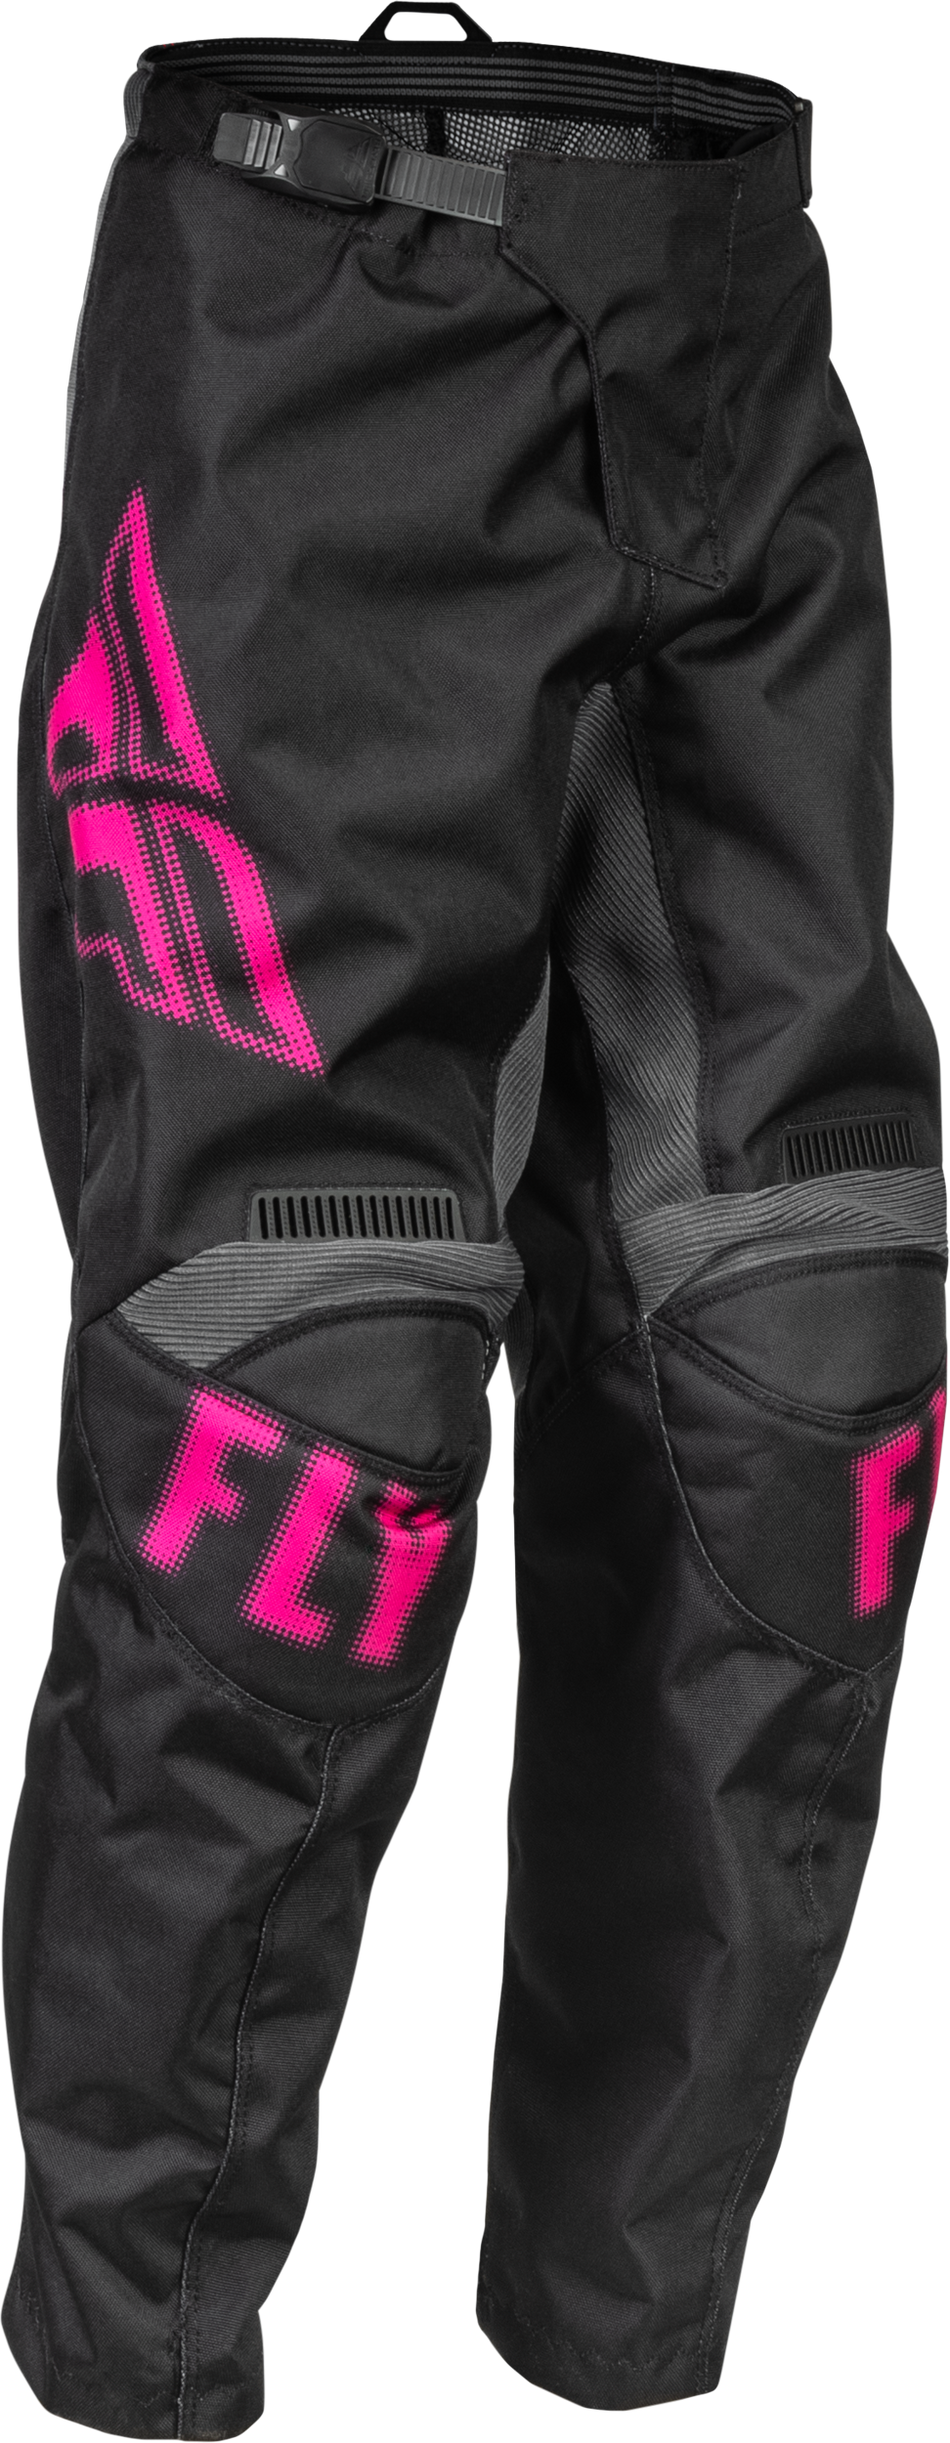 FLY RACING Youth F-16 Pants Black/Pink Sz 20 376-23120